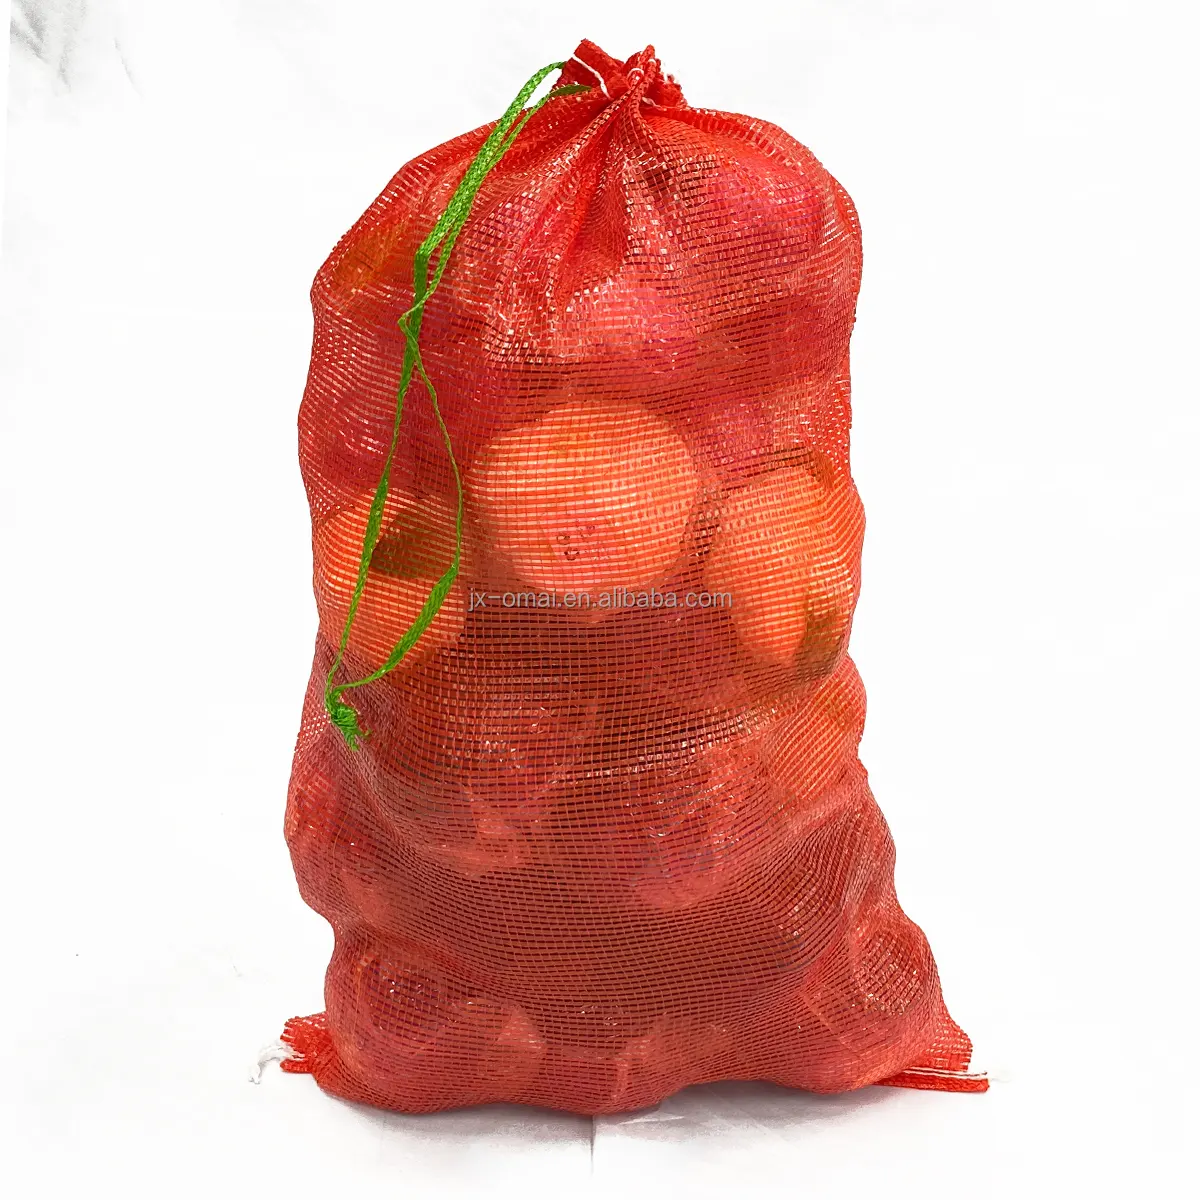 Grosir kentang bawang plastik tas jala leno tubular merah sayuran tas kemasan jaring